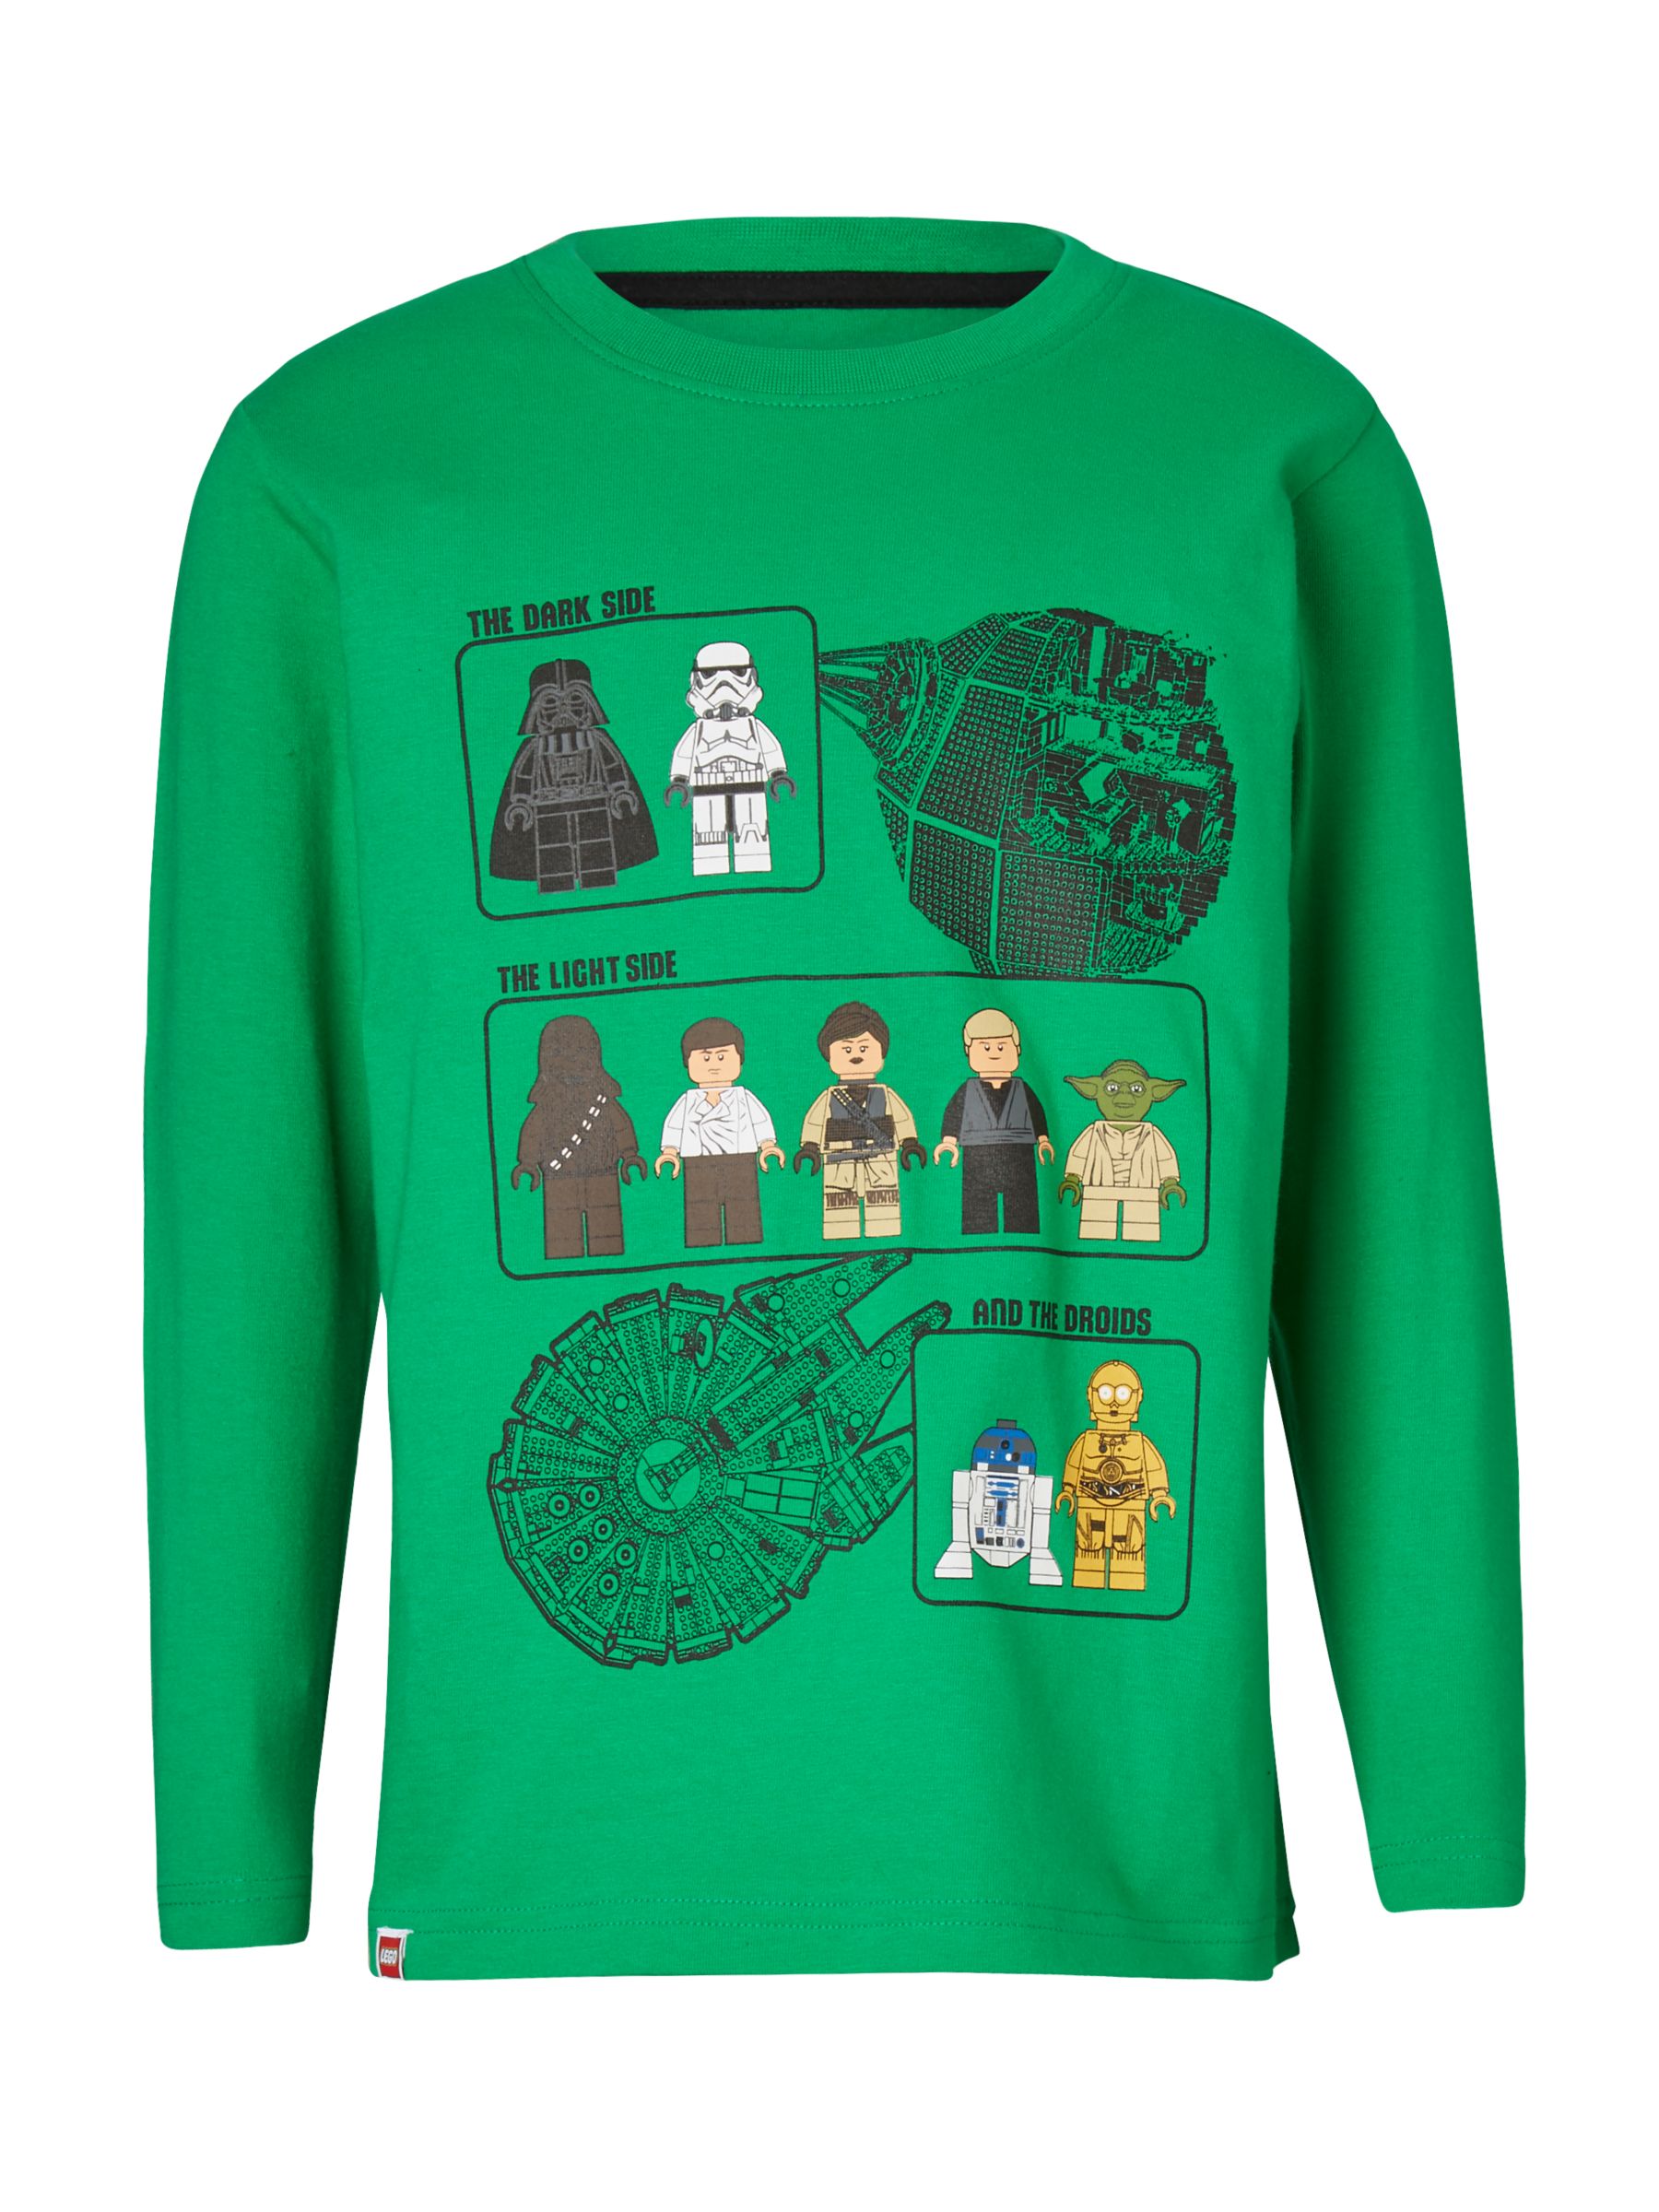 LEGO Children's Star Wars T-Shirt Review